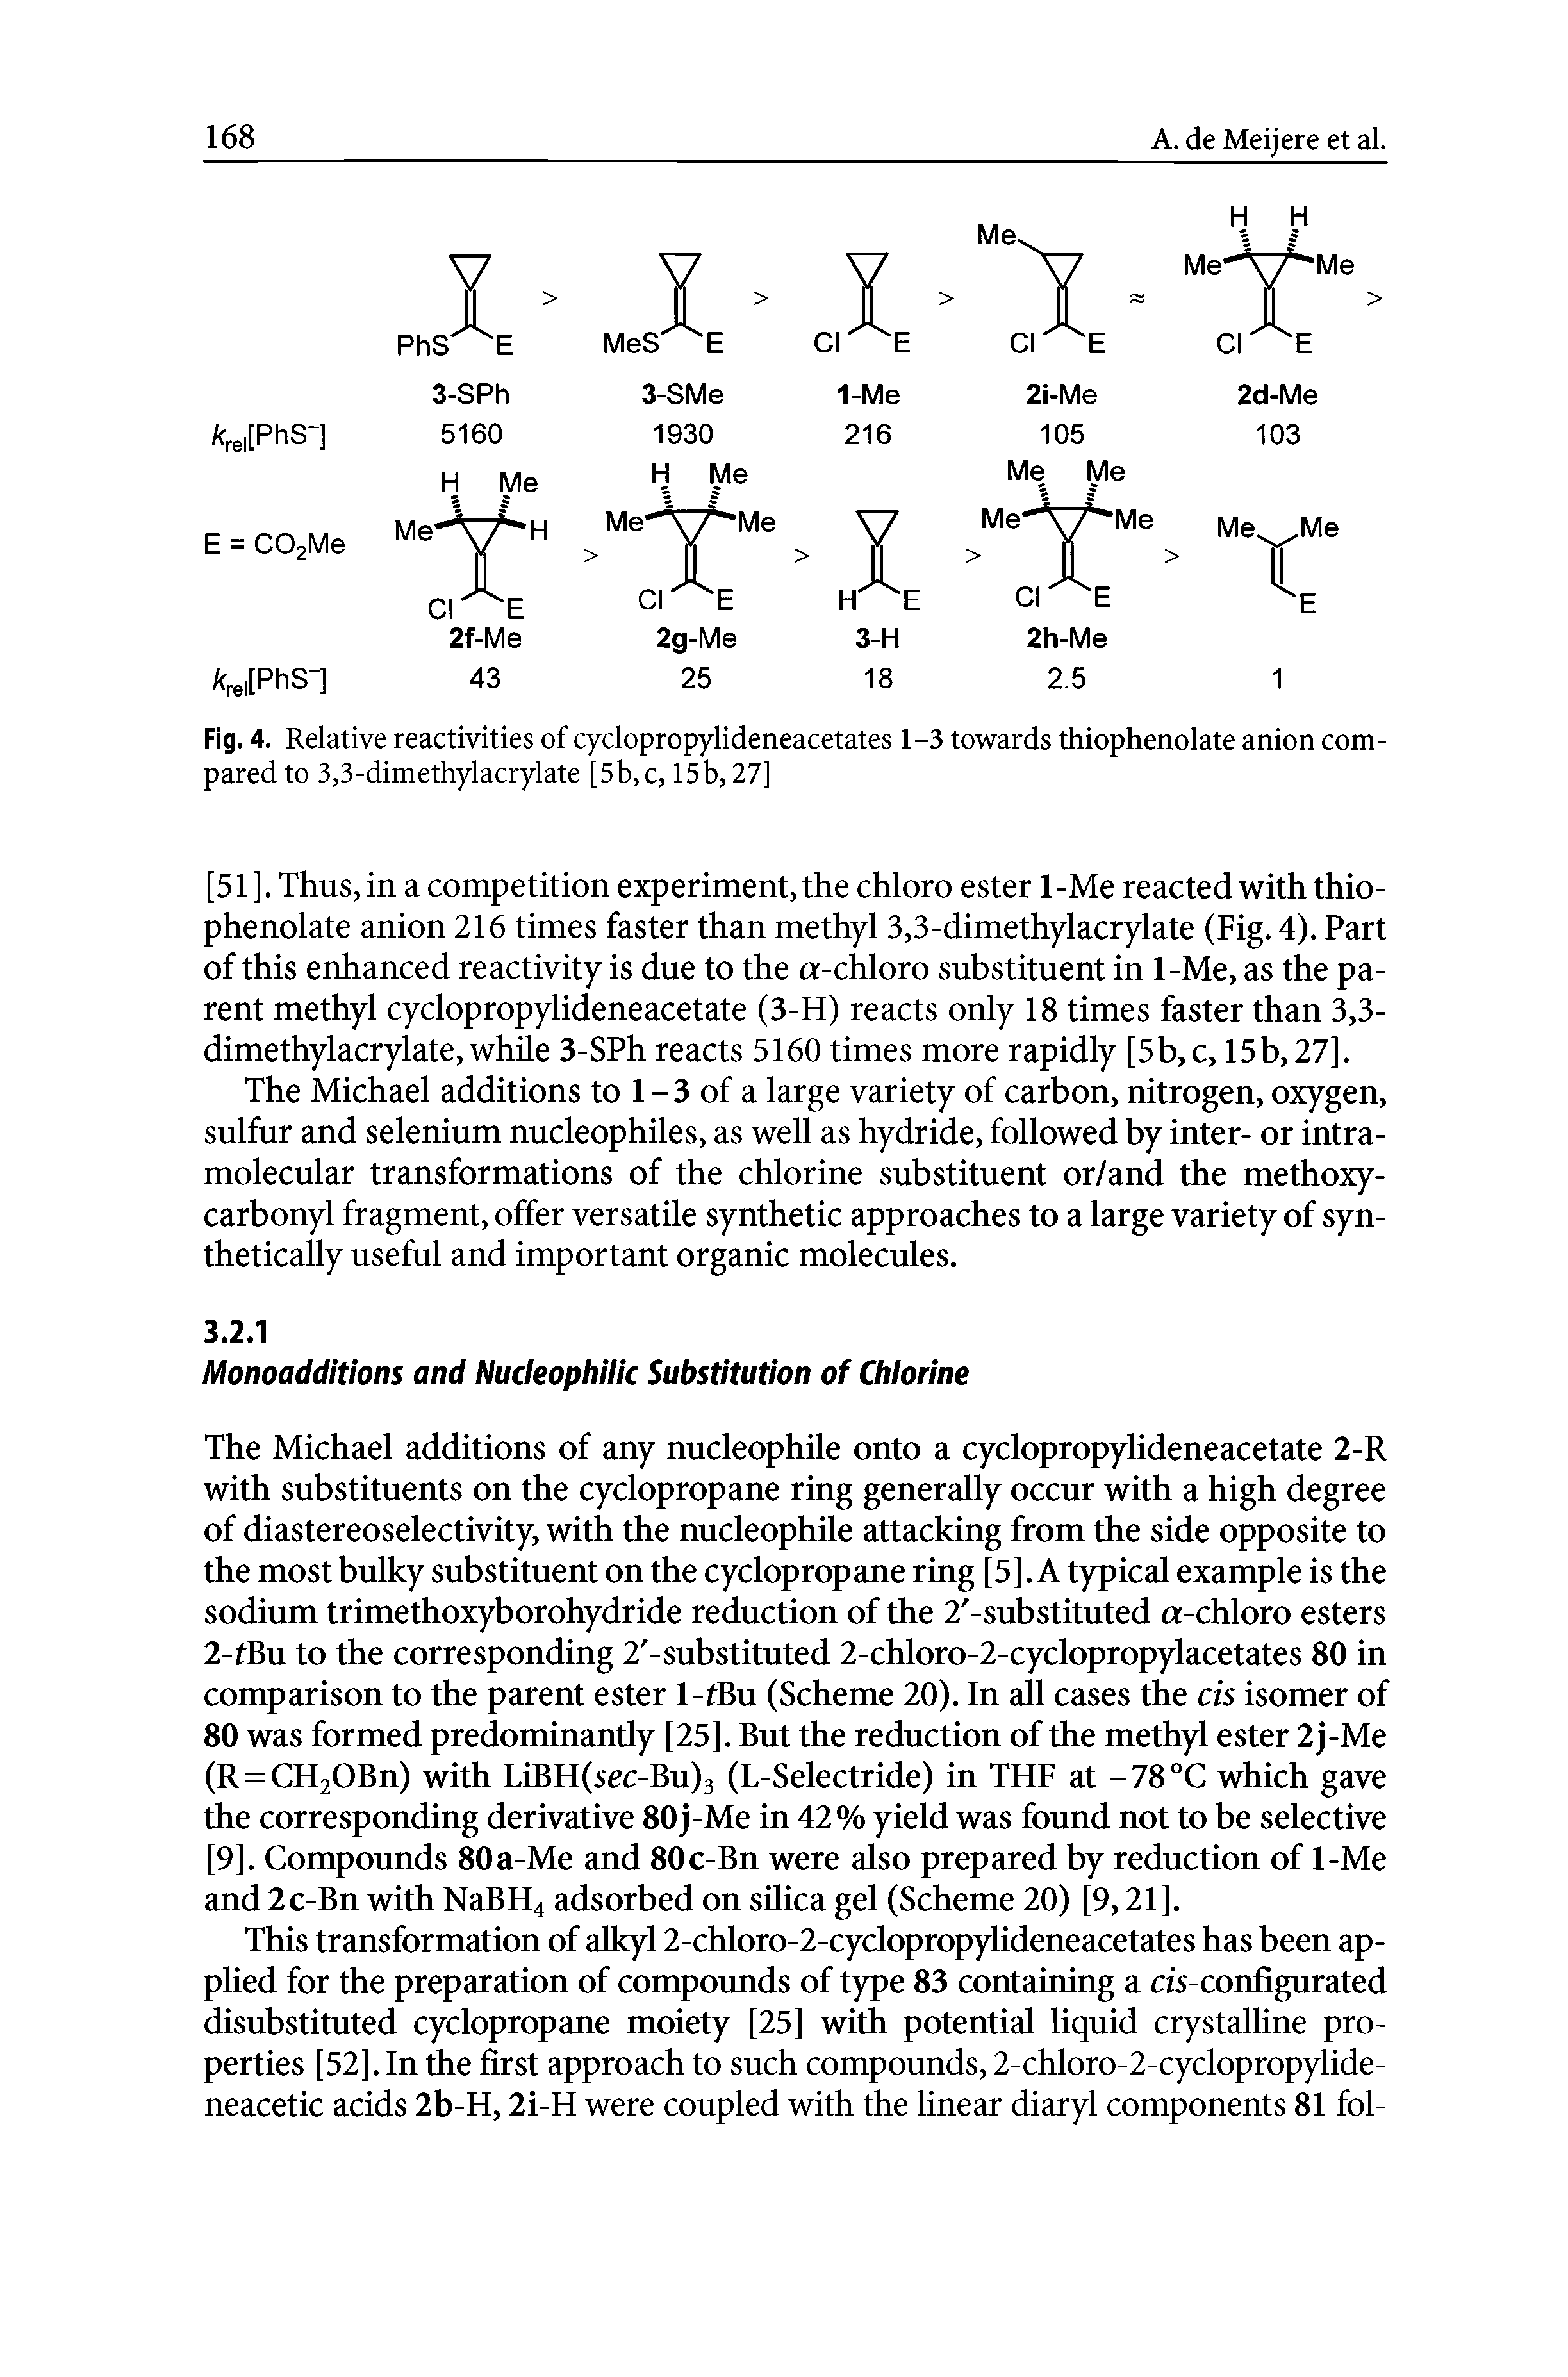 Fig. 4. Relative reactivities of cyclopropylideneacetates 1-3 towards thiophenolate anion compared to 3,3-dimethylacrylate [5b,c, 15b, 27]...